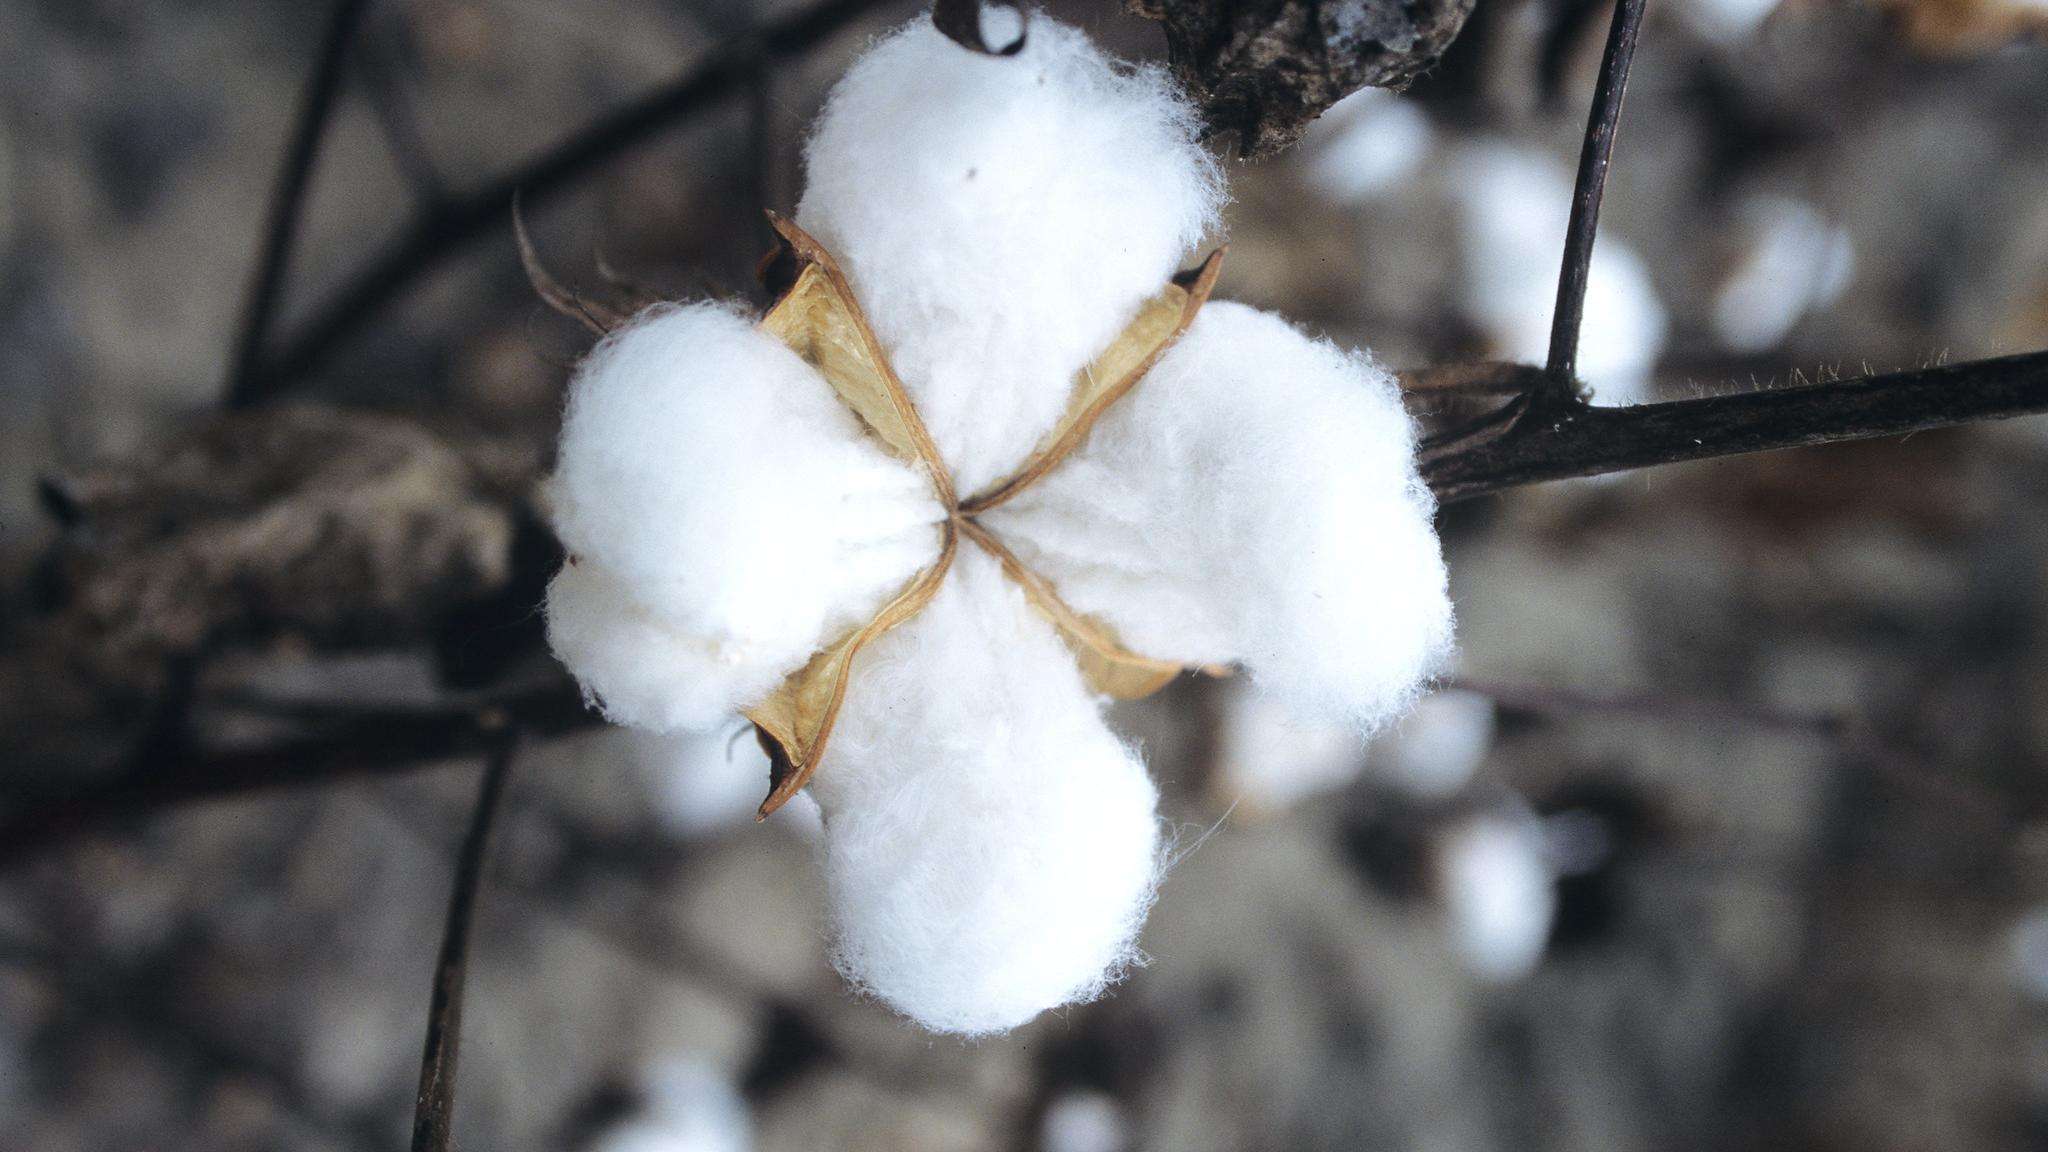 Mature white cotton boll on a plant stem.